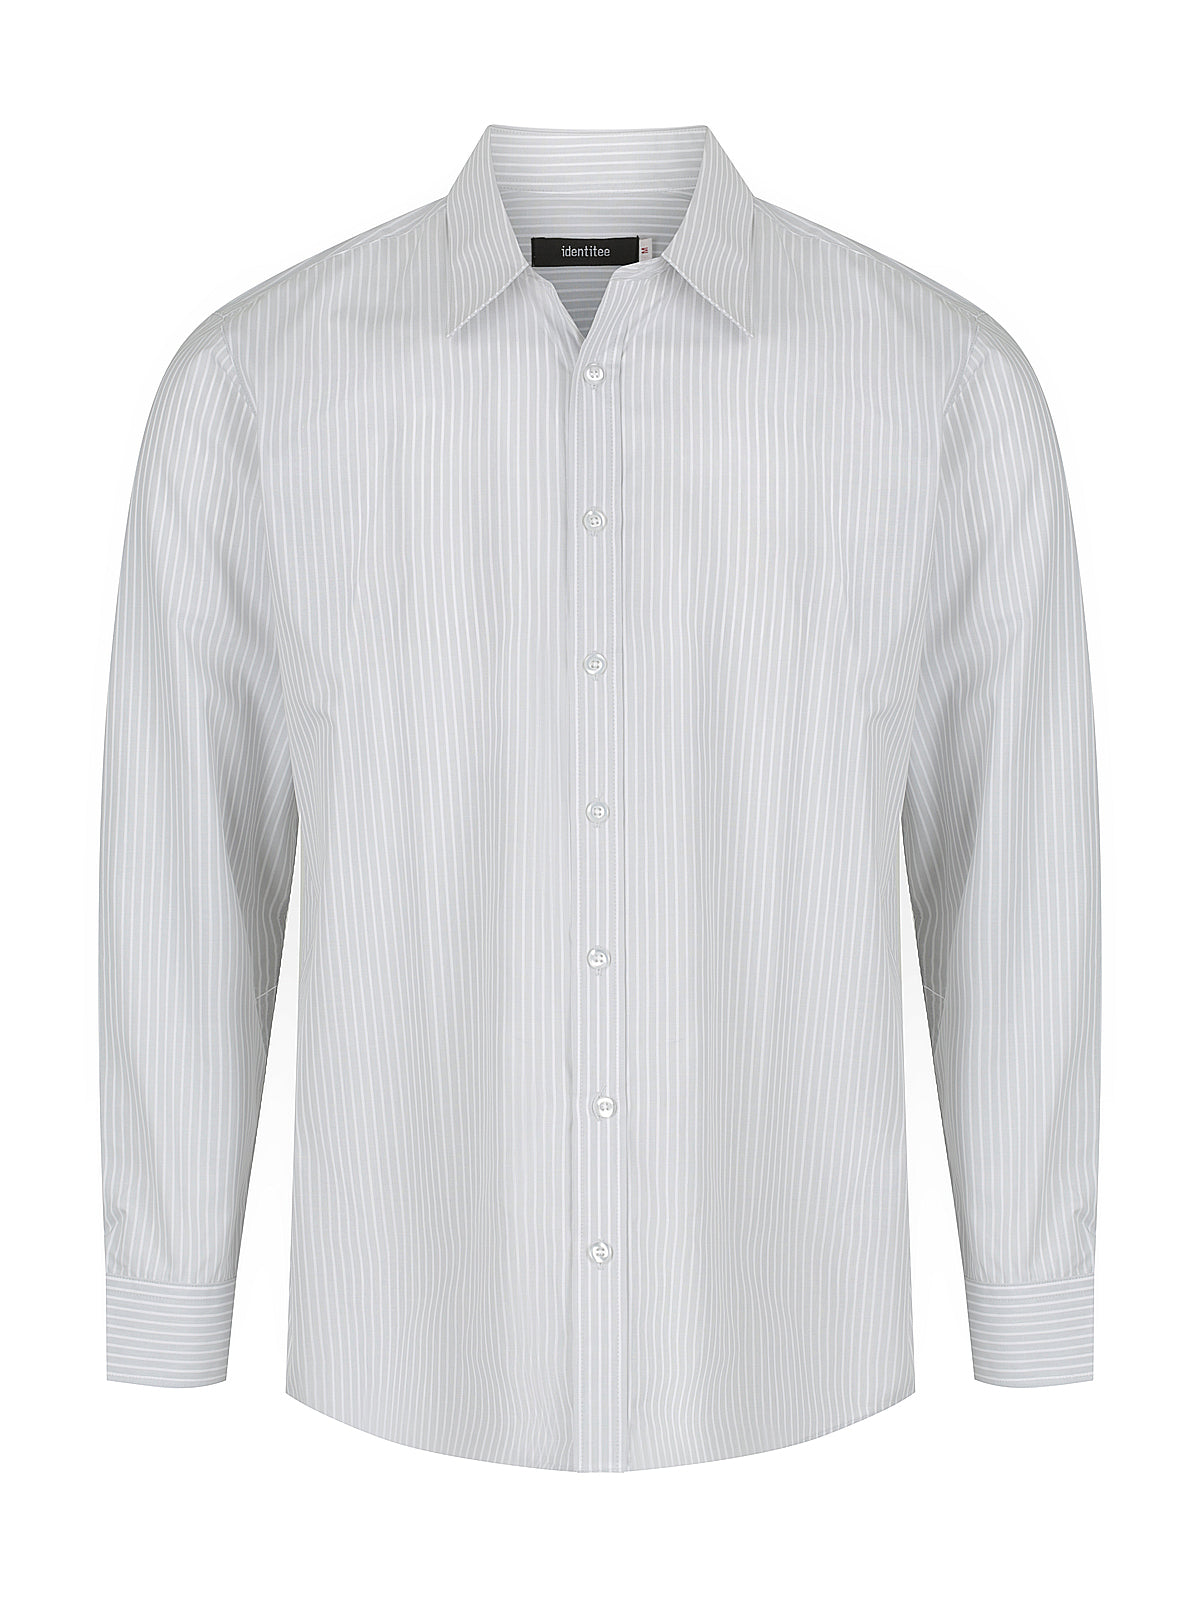 Identitee - W41 – Men’s York Long Sleeve Shirt